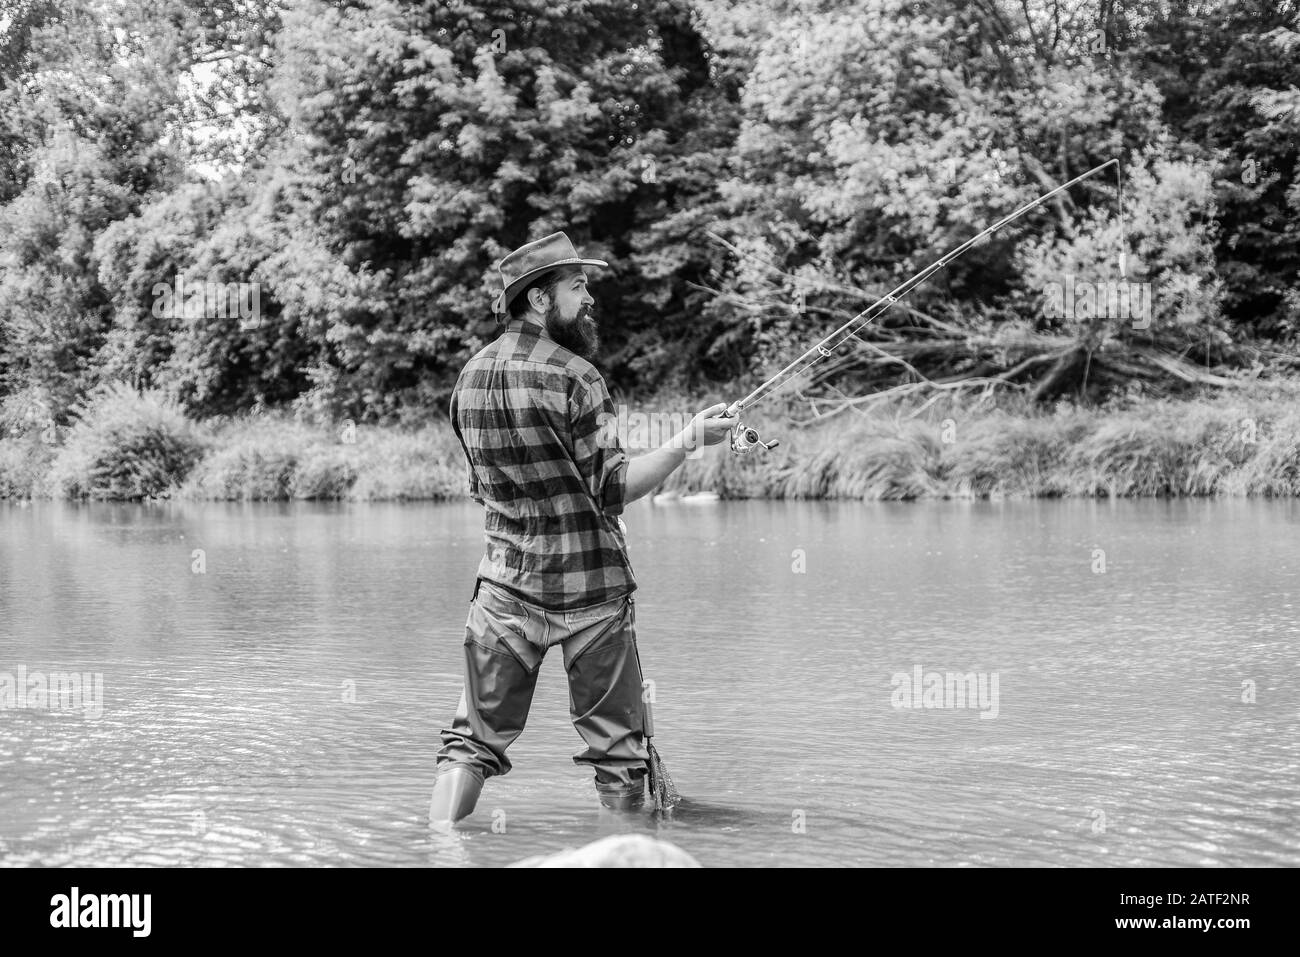 Fisherman catching fish. Fishing hobby. Calm and tranquil